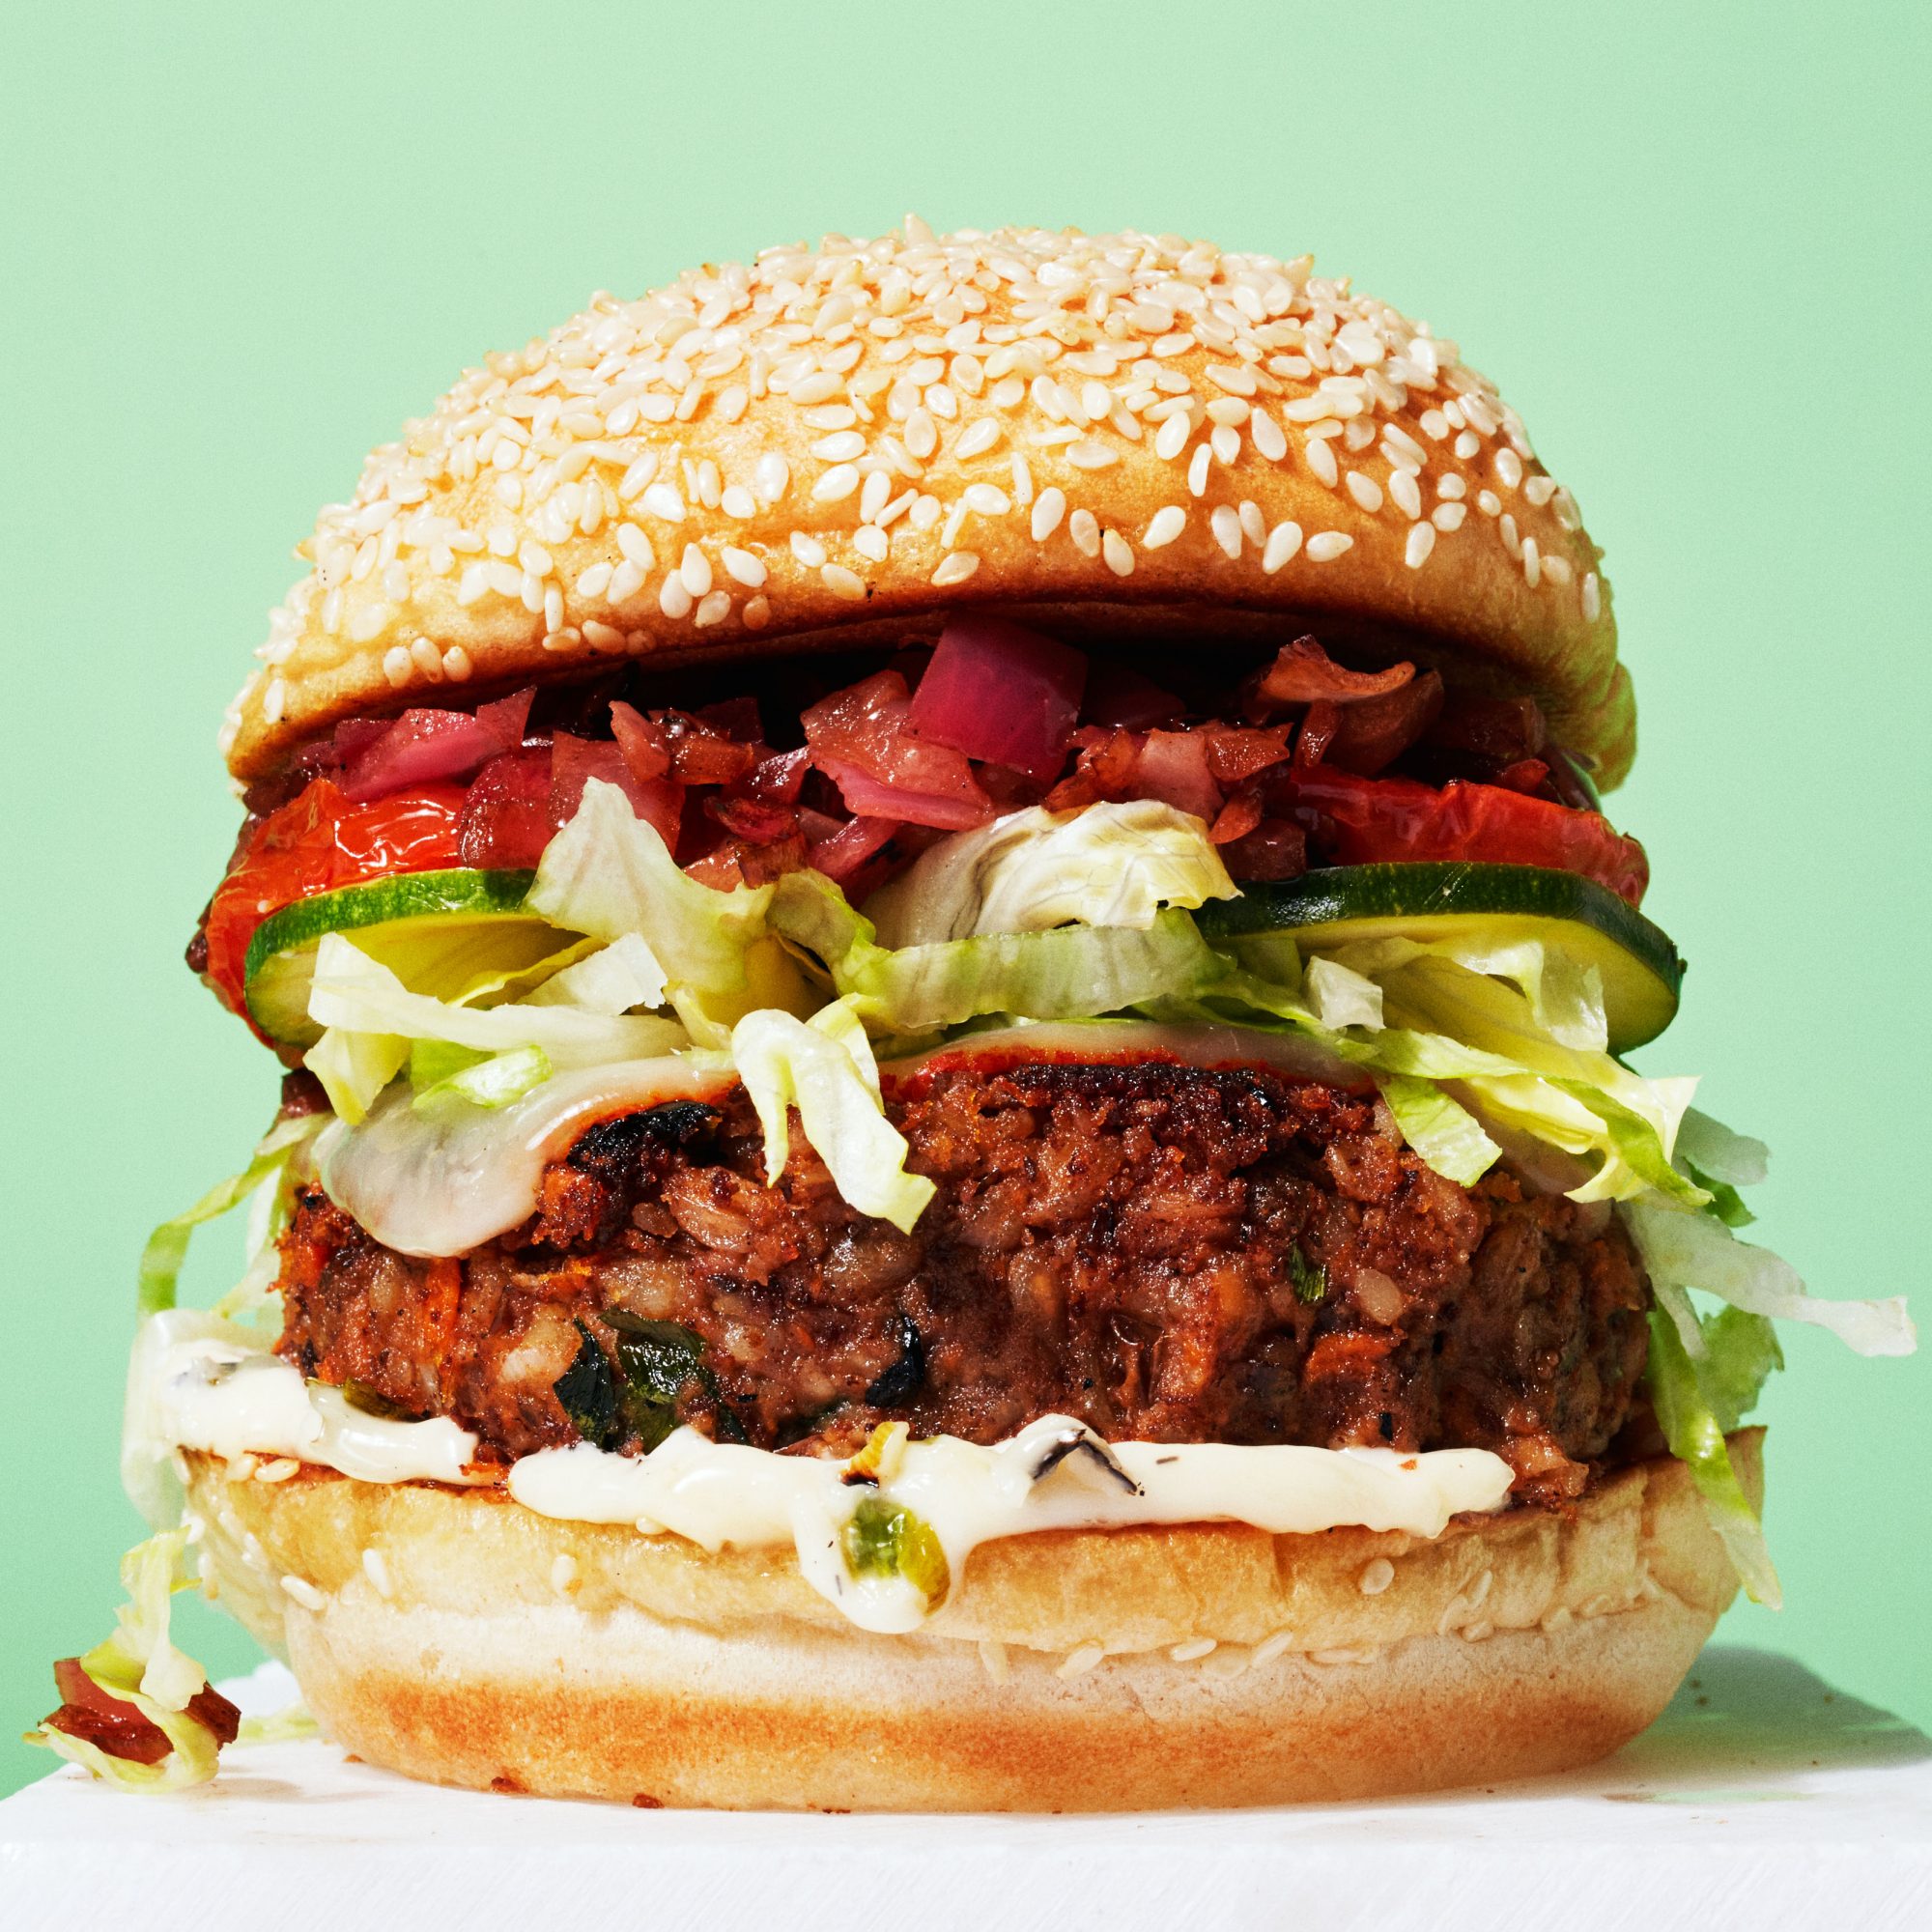 The Best-Ever Veggie Burger